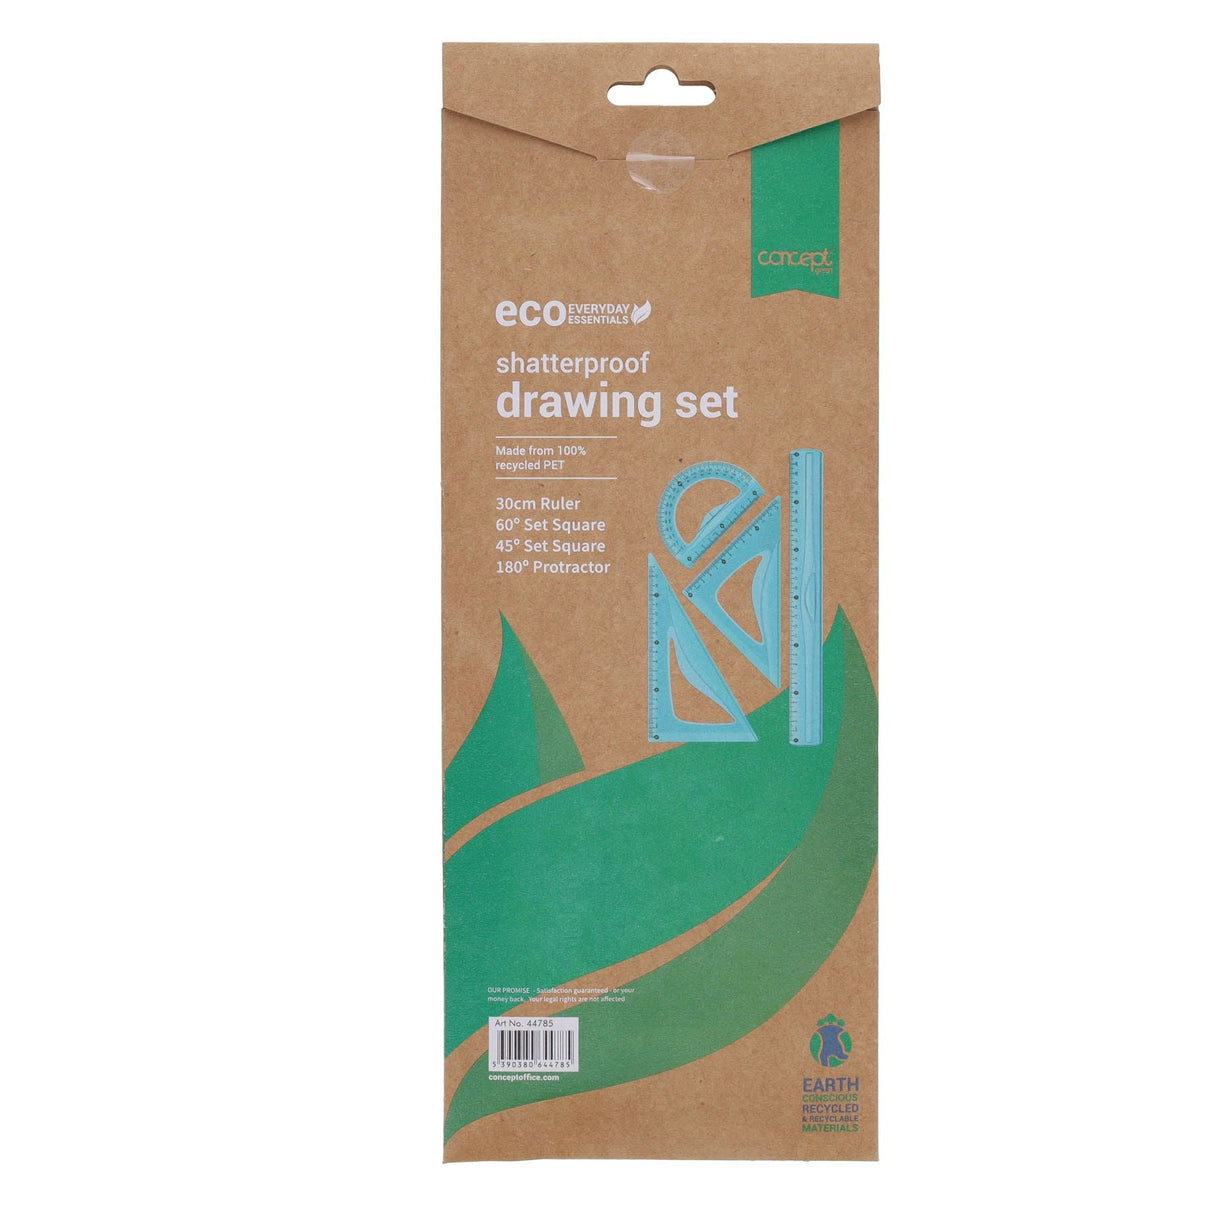 Concept Green Shatterproof Drawing Set - Pack of 4 | Stationery Shop UK